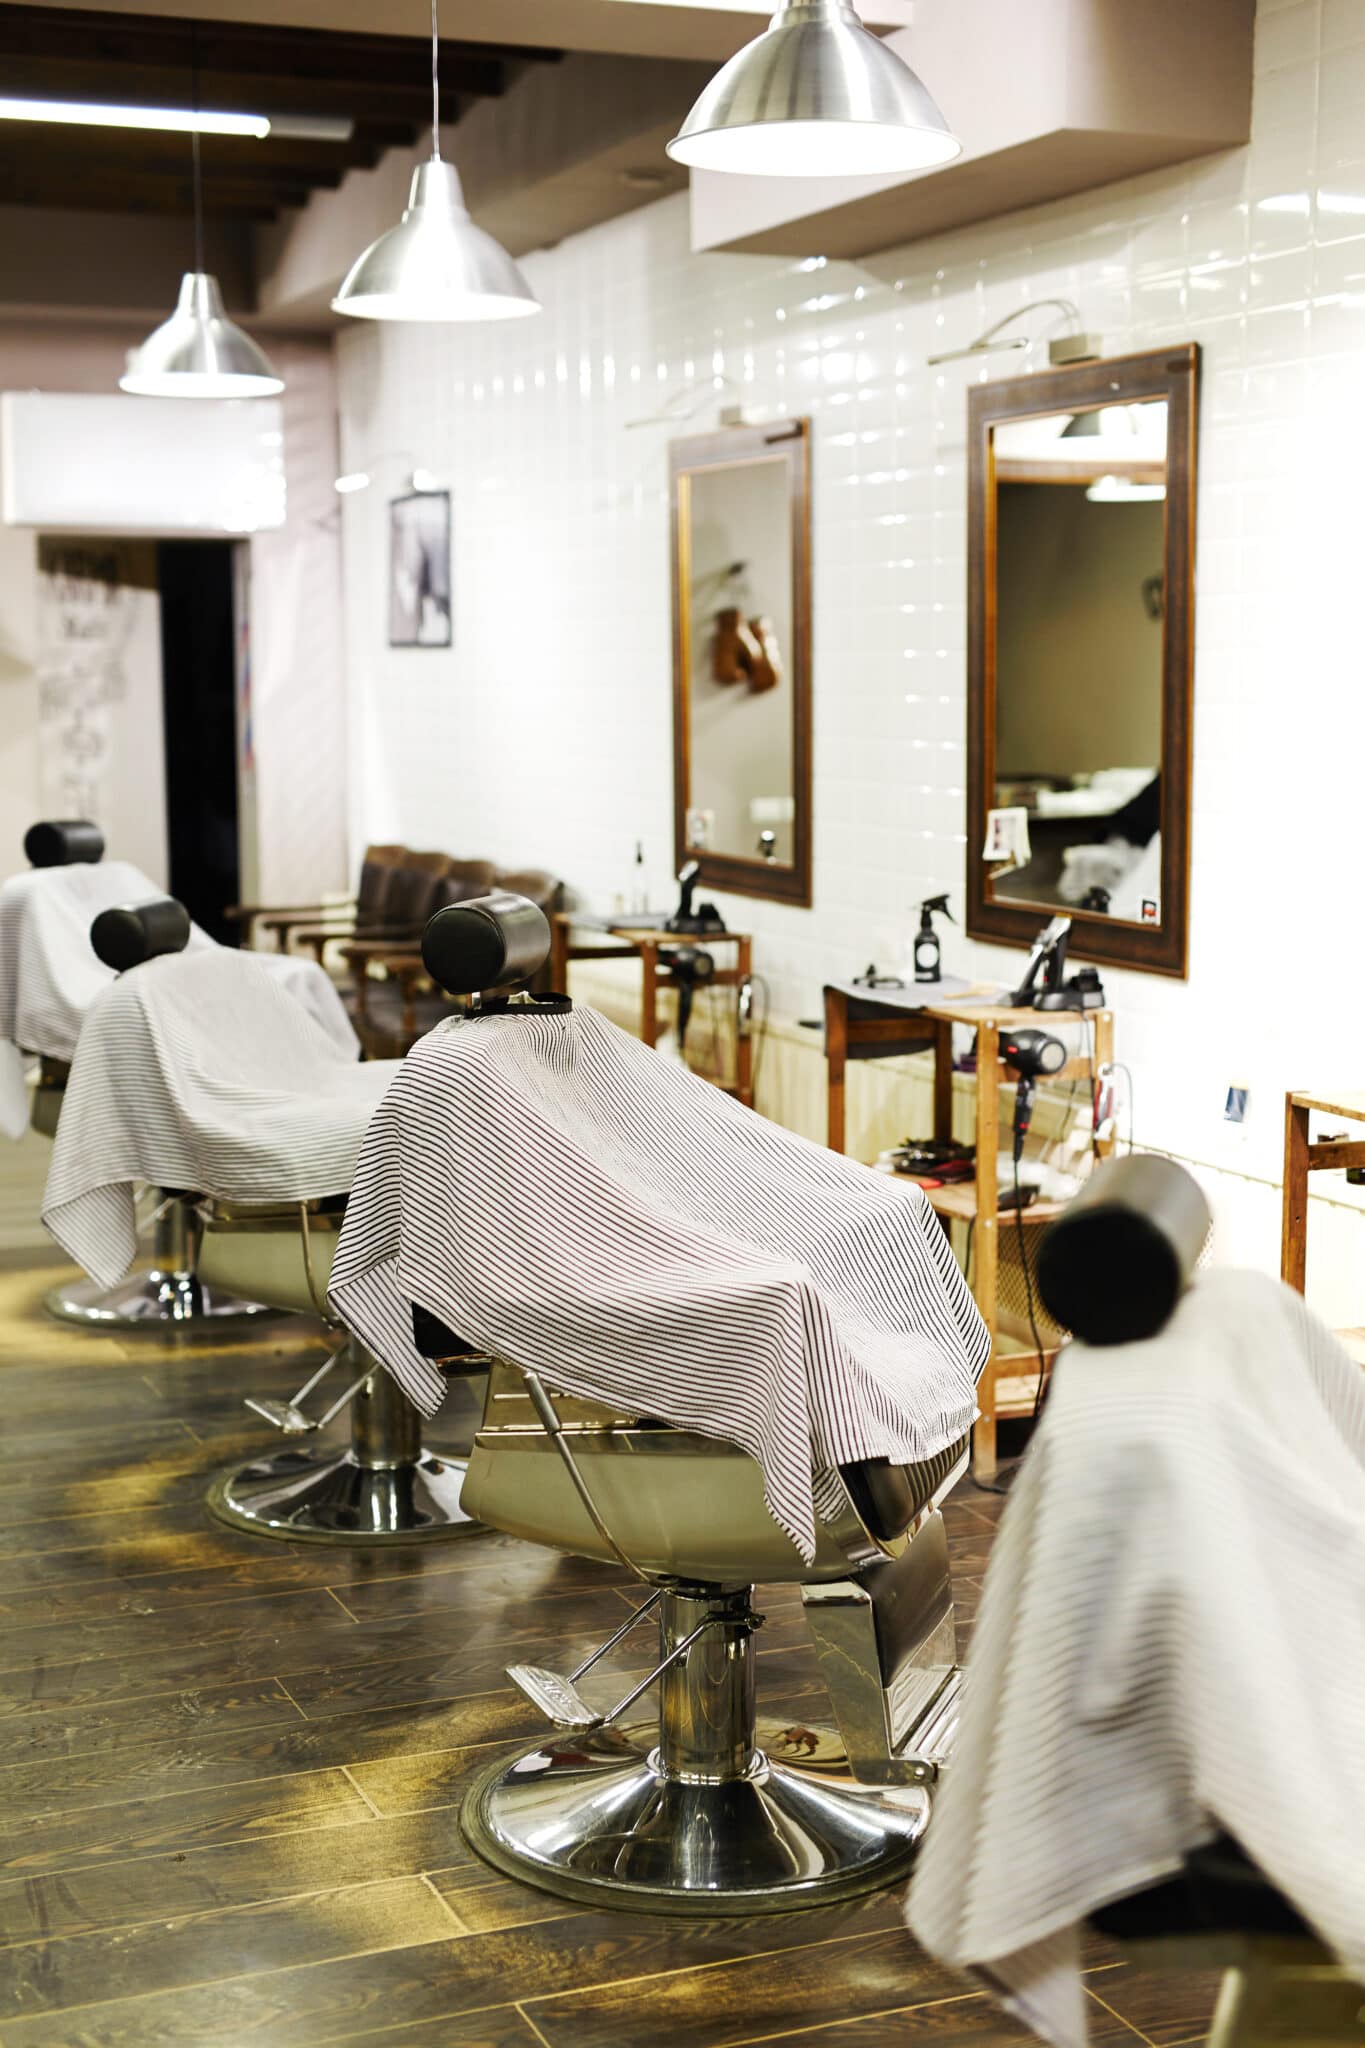 Hair salon cleaning checklist image of modern hair salon clean row of salon chairs